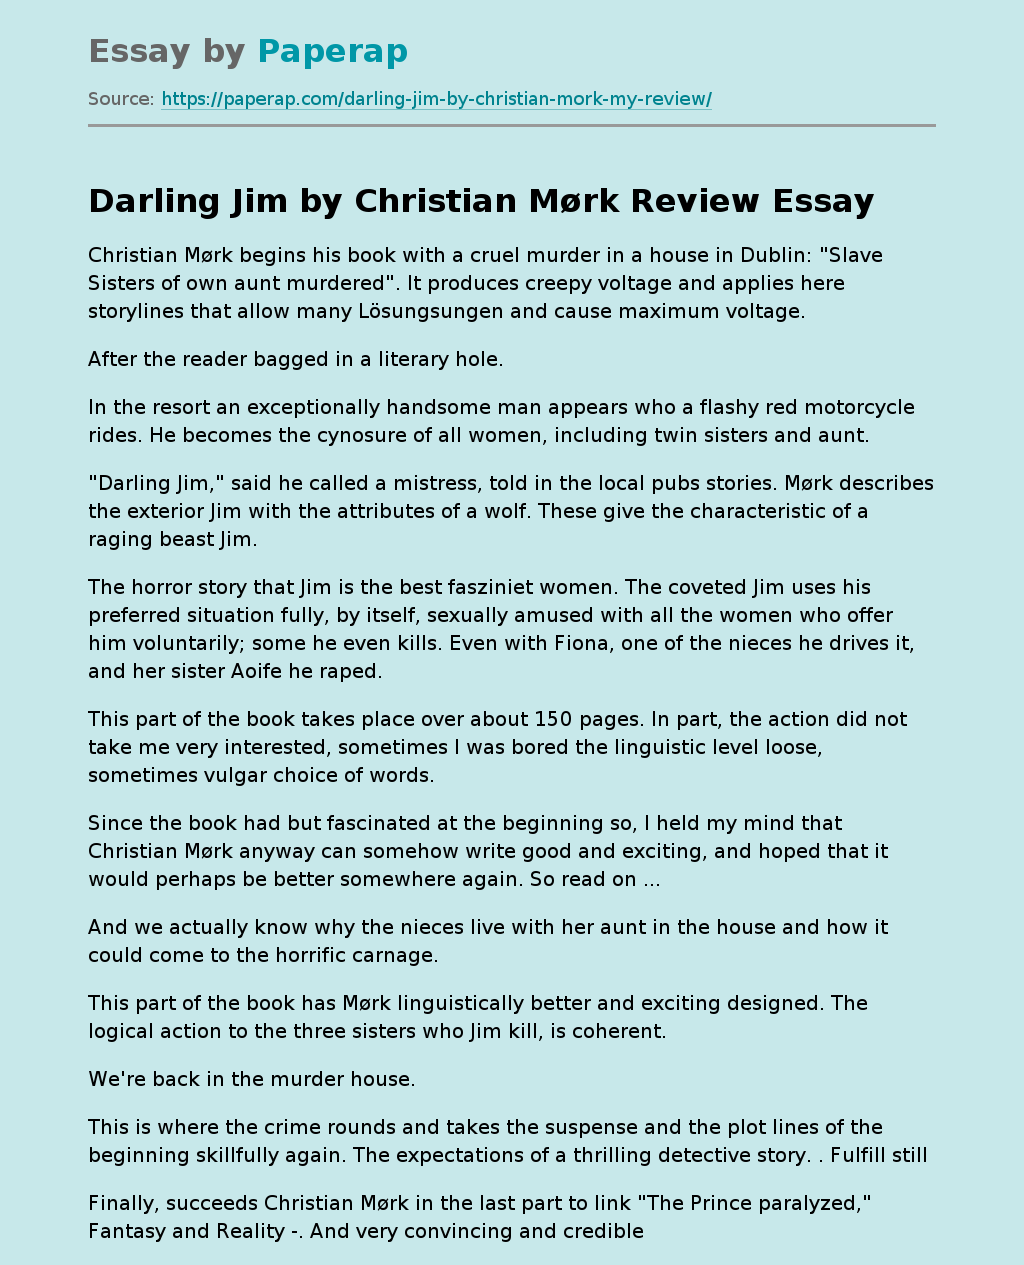 Darling Jim by Christian Mork